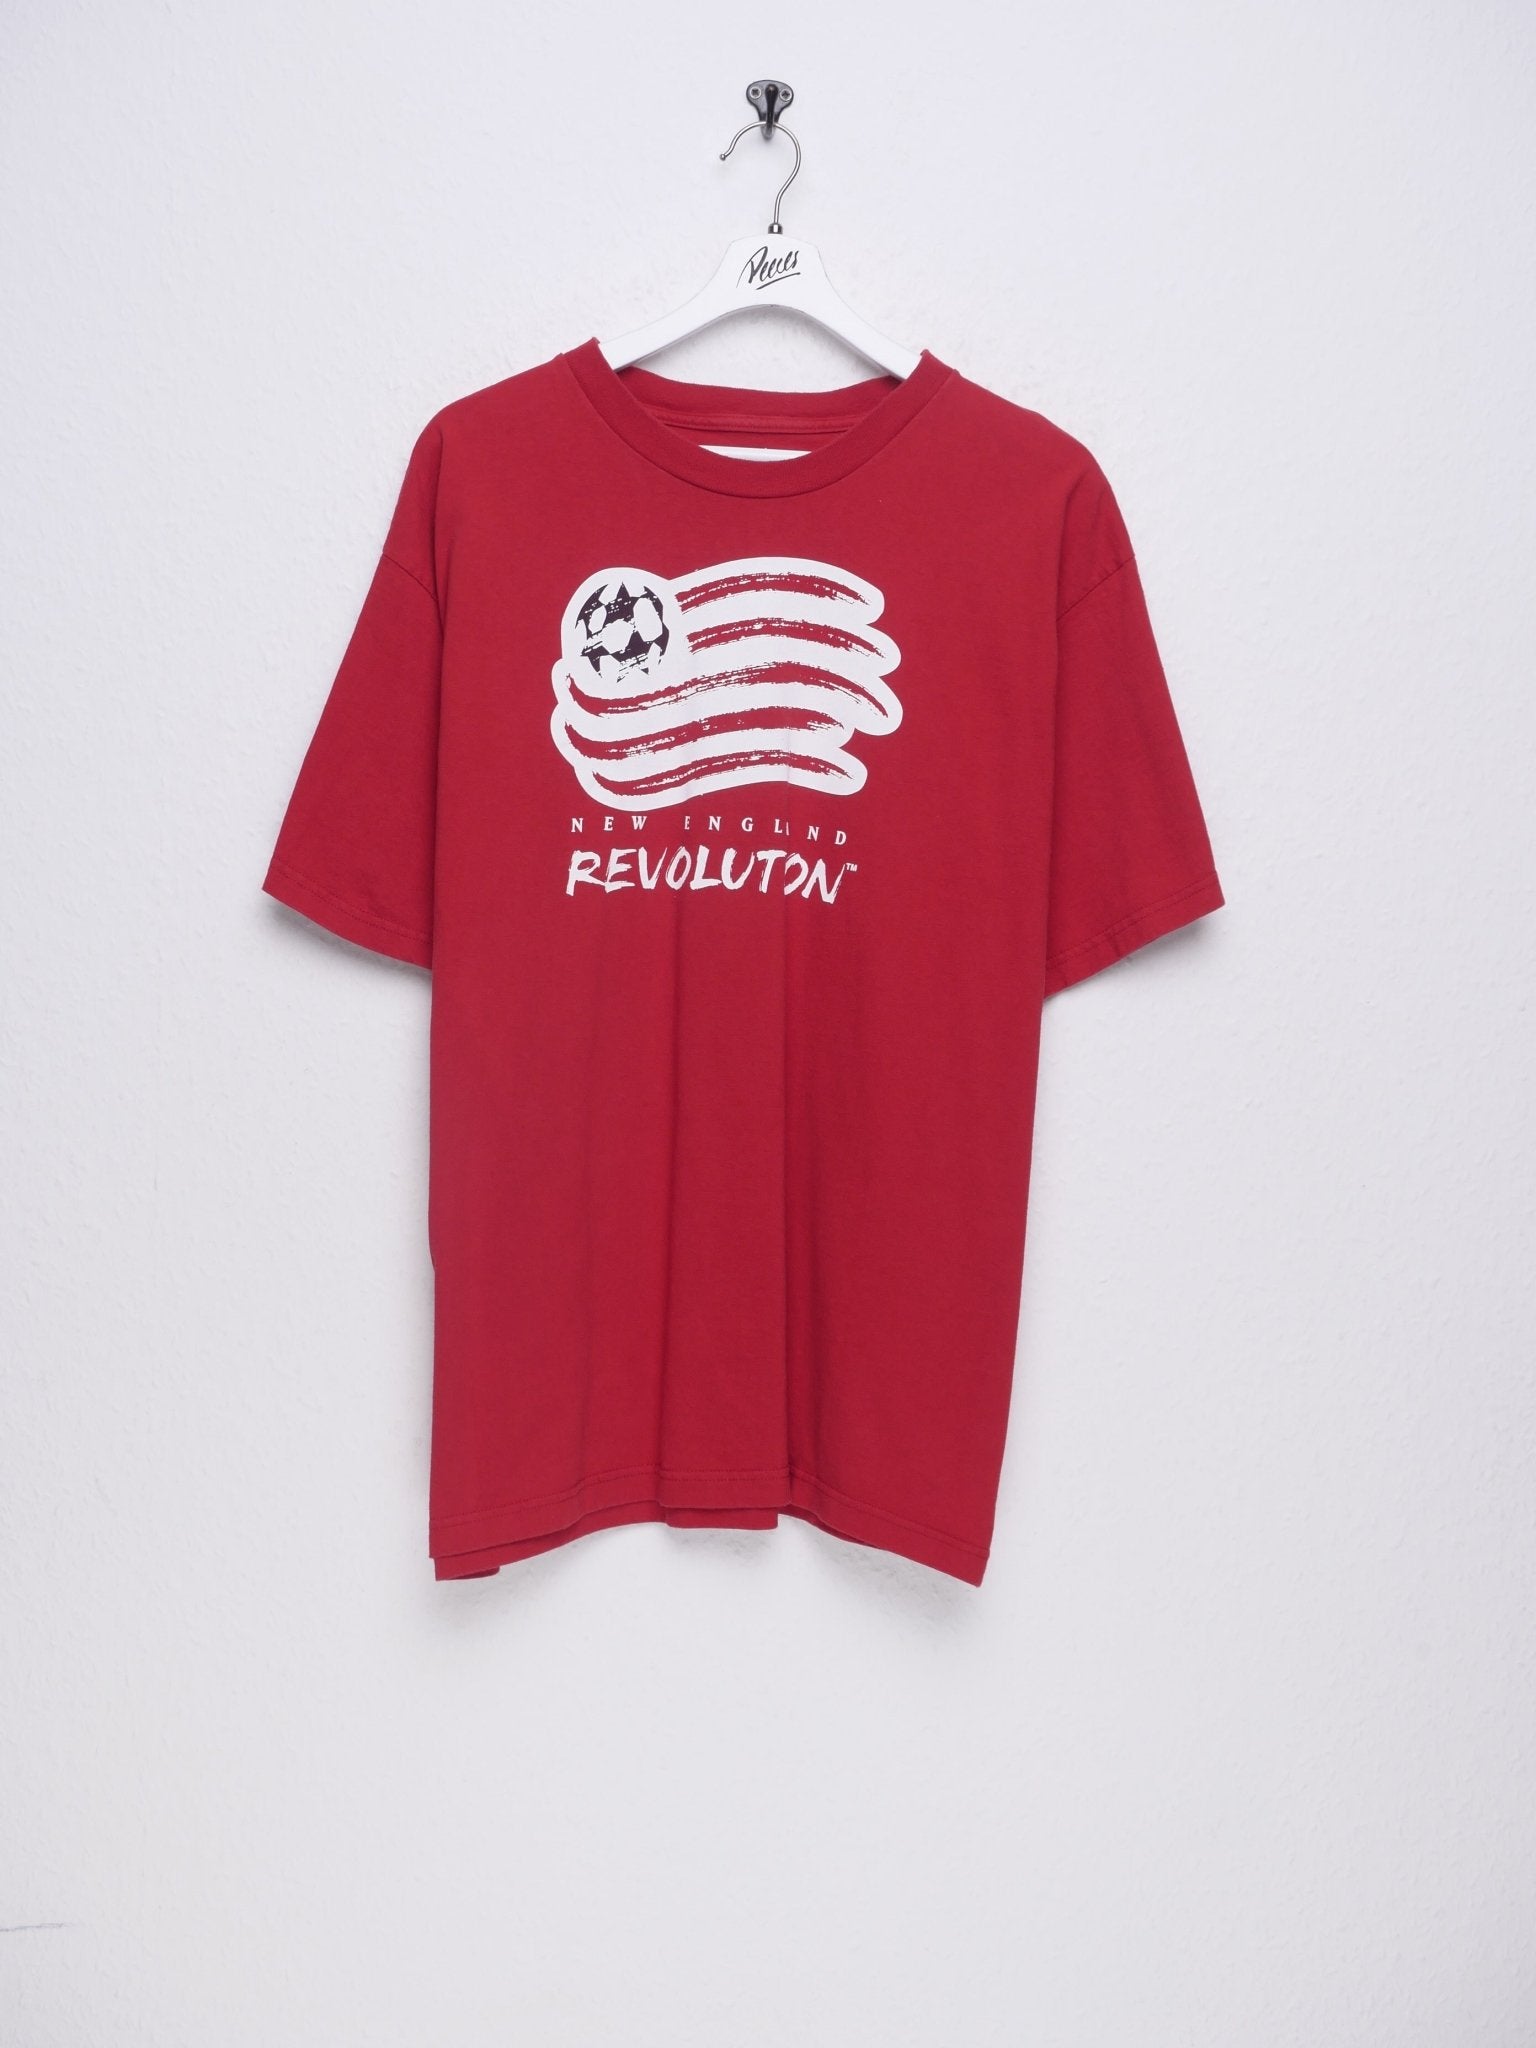 Adidas printed New England Logo Vintage Shirt - Peeces